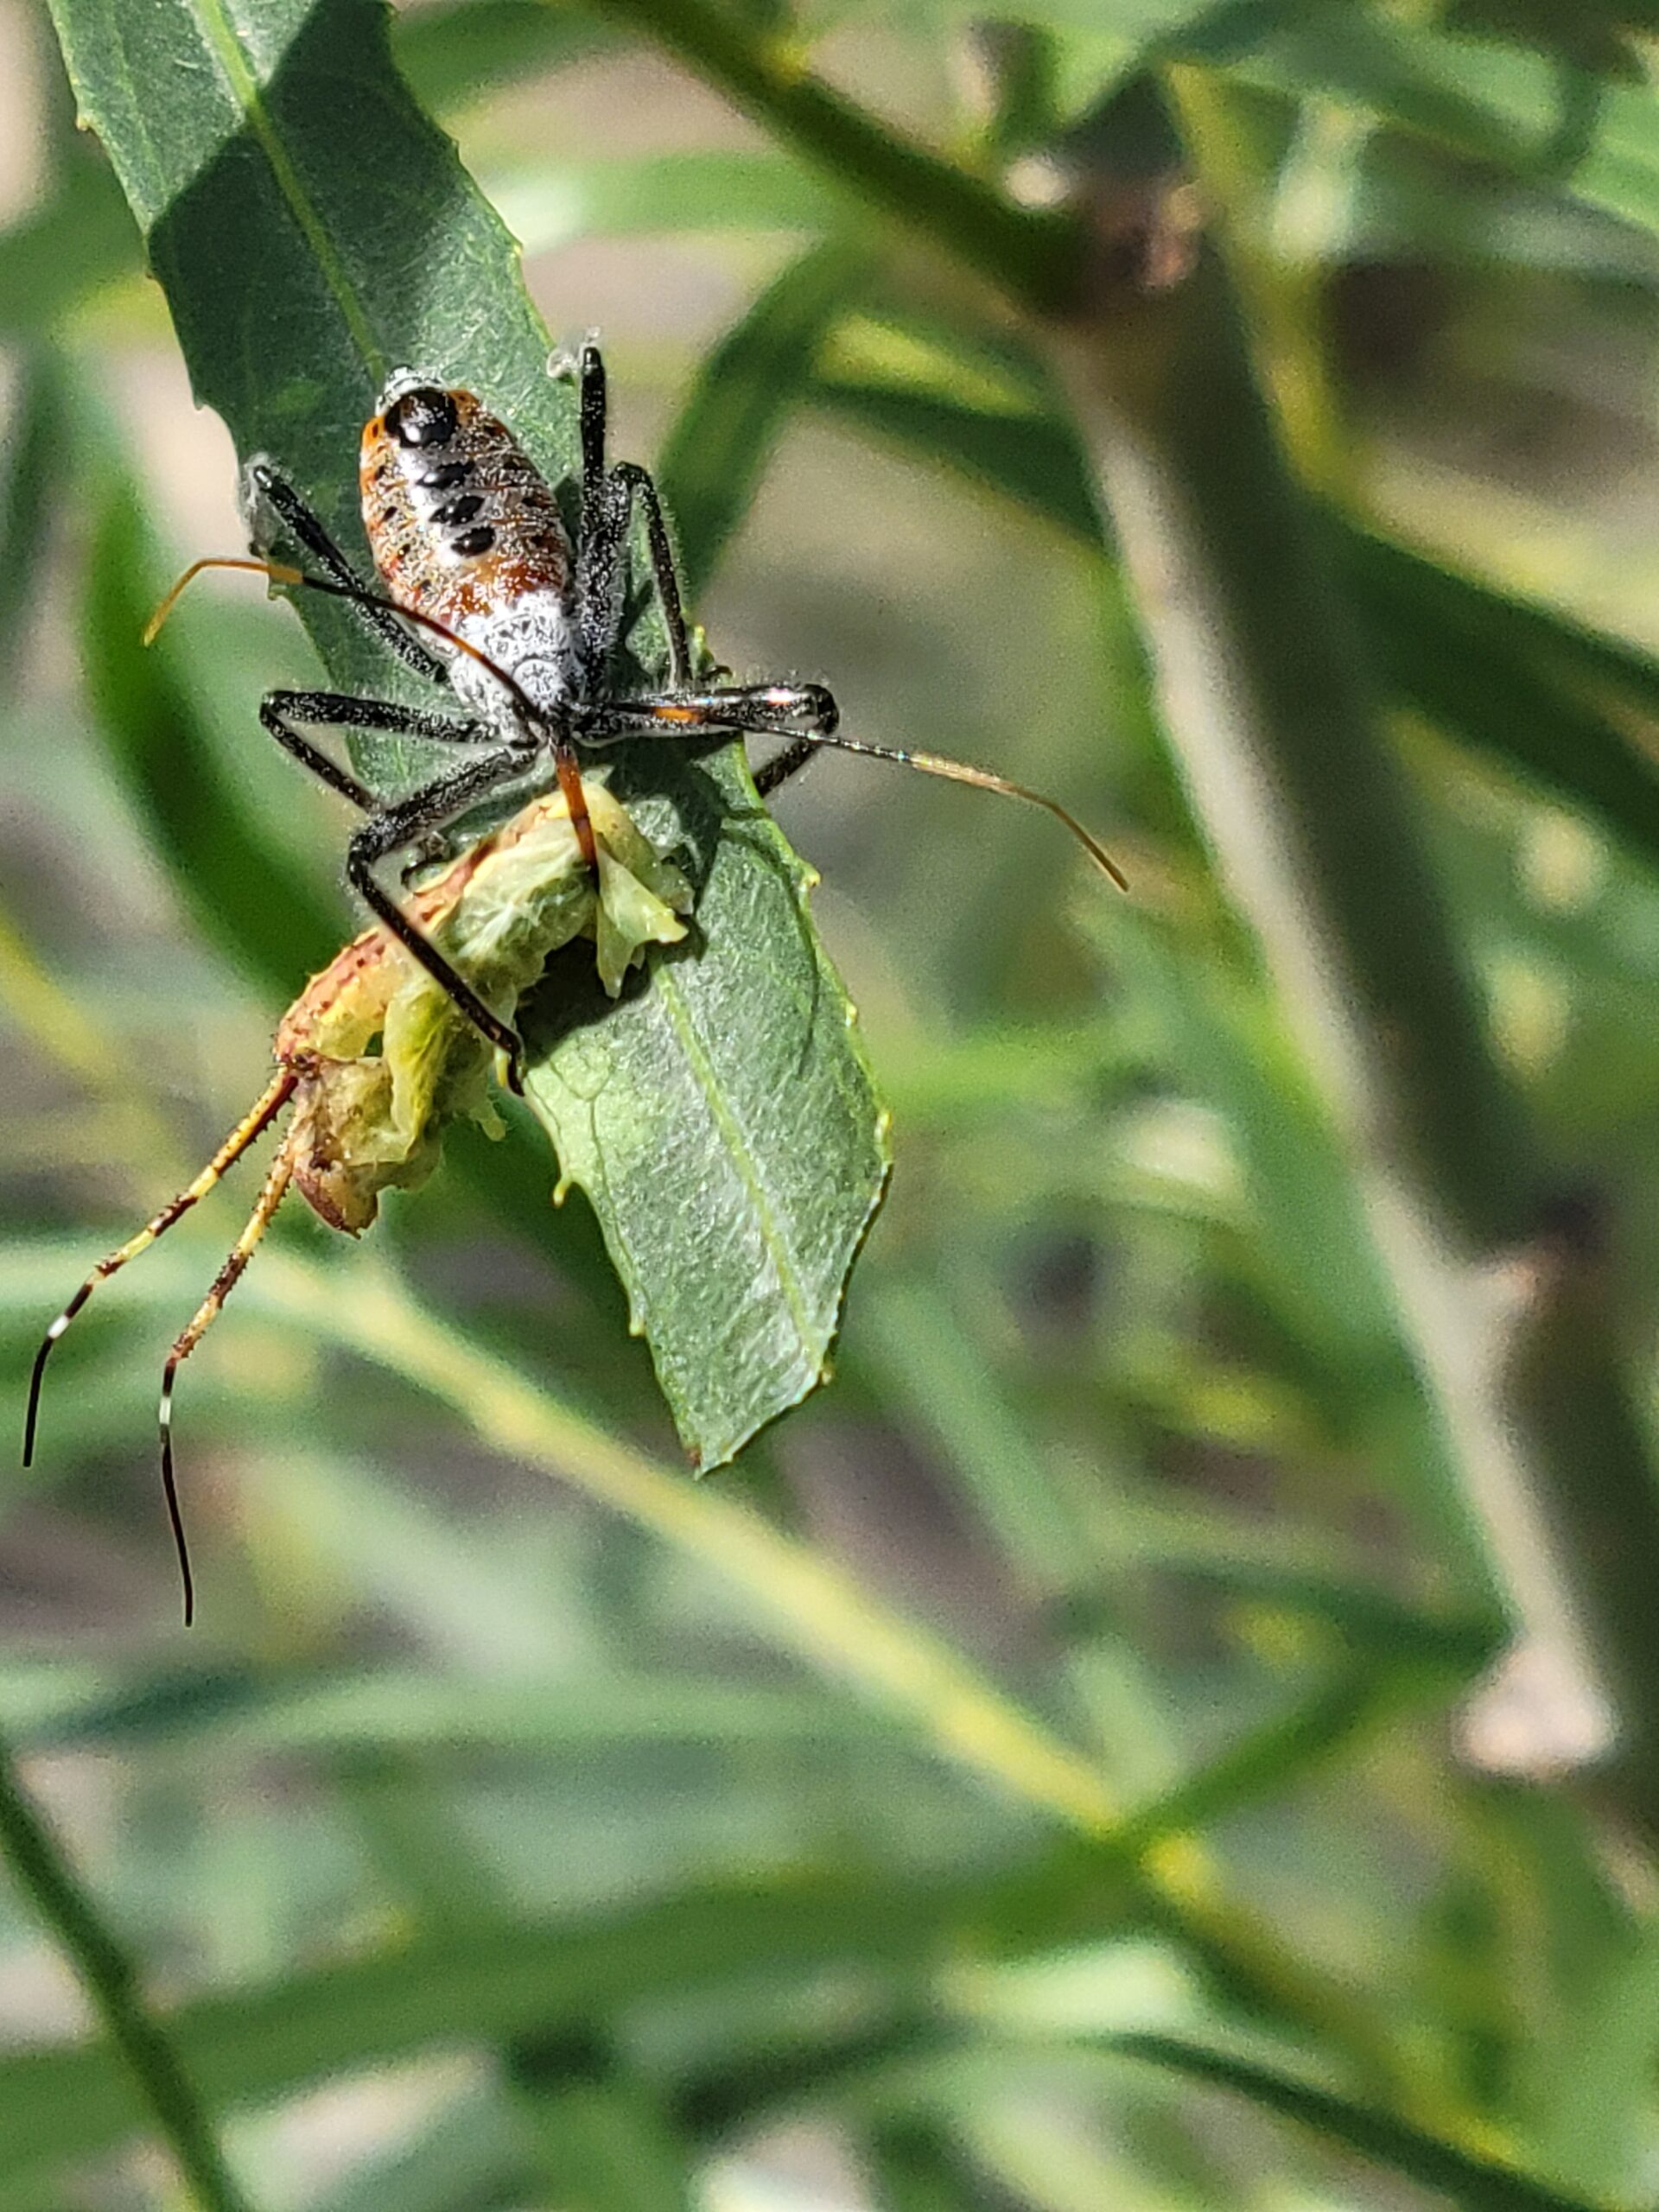 Assassin bug eating